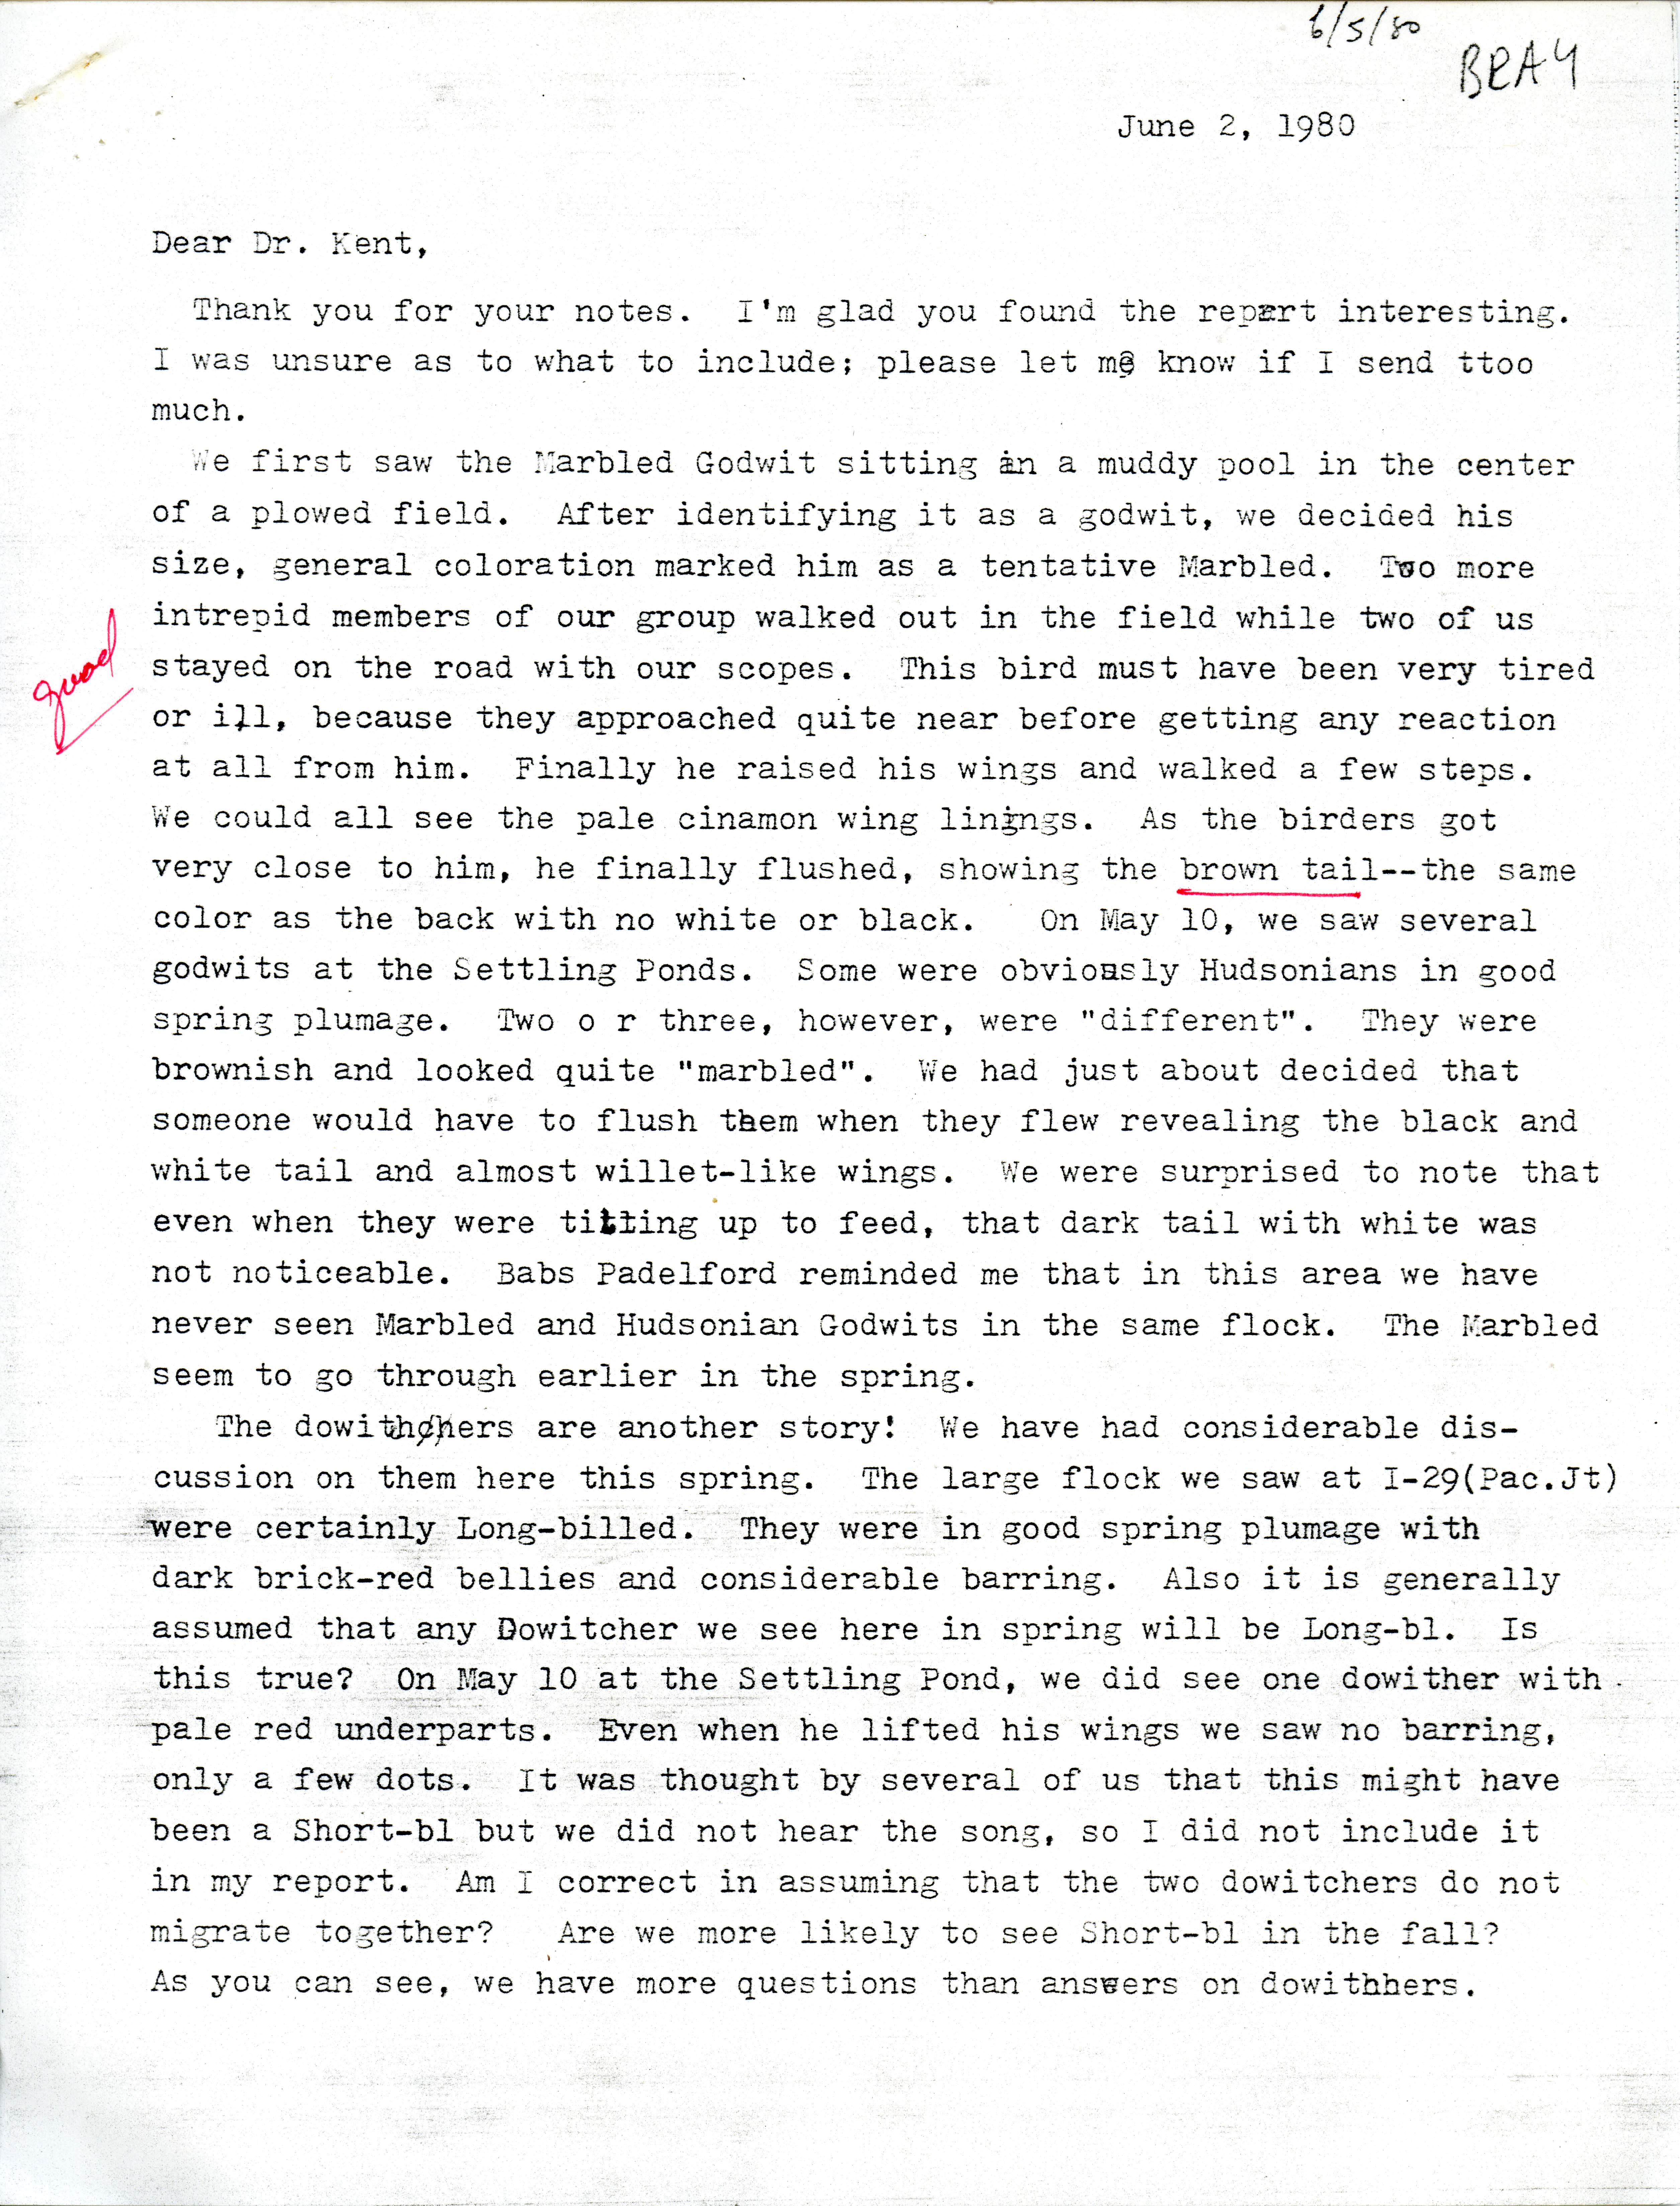 Tanya Bray letter to Thomas H. Kent regarding bird sightings, June 2, 1980